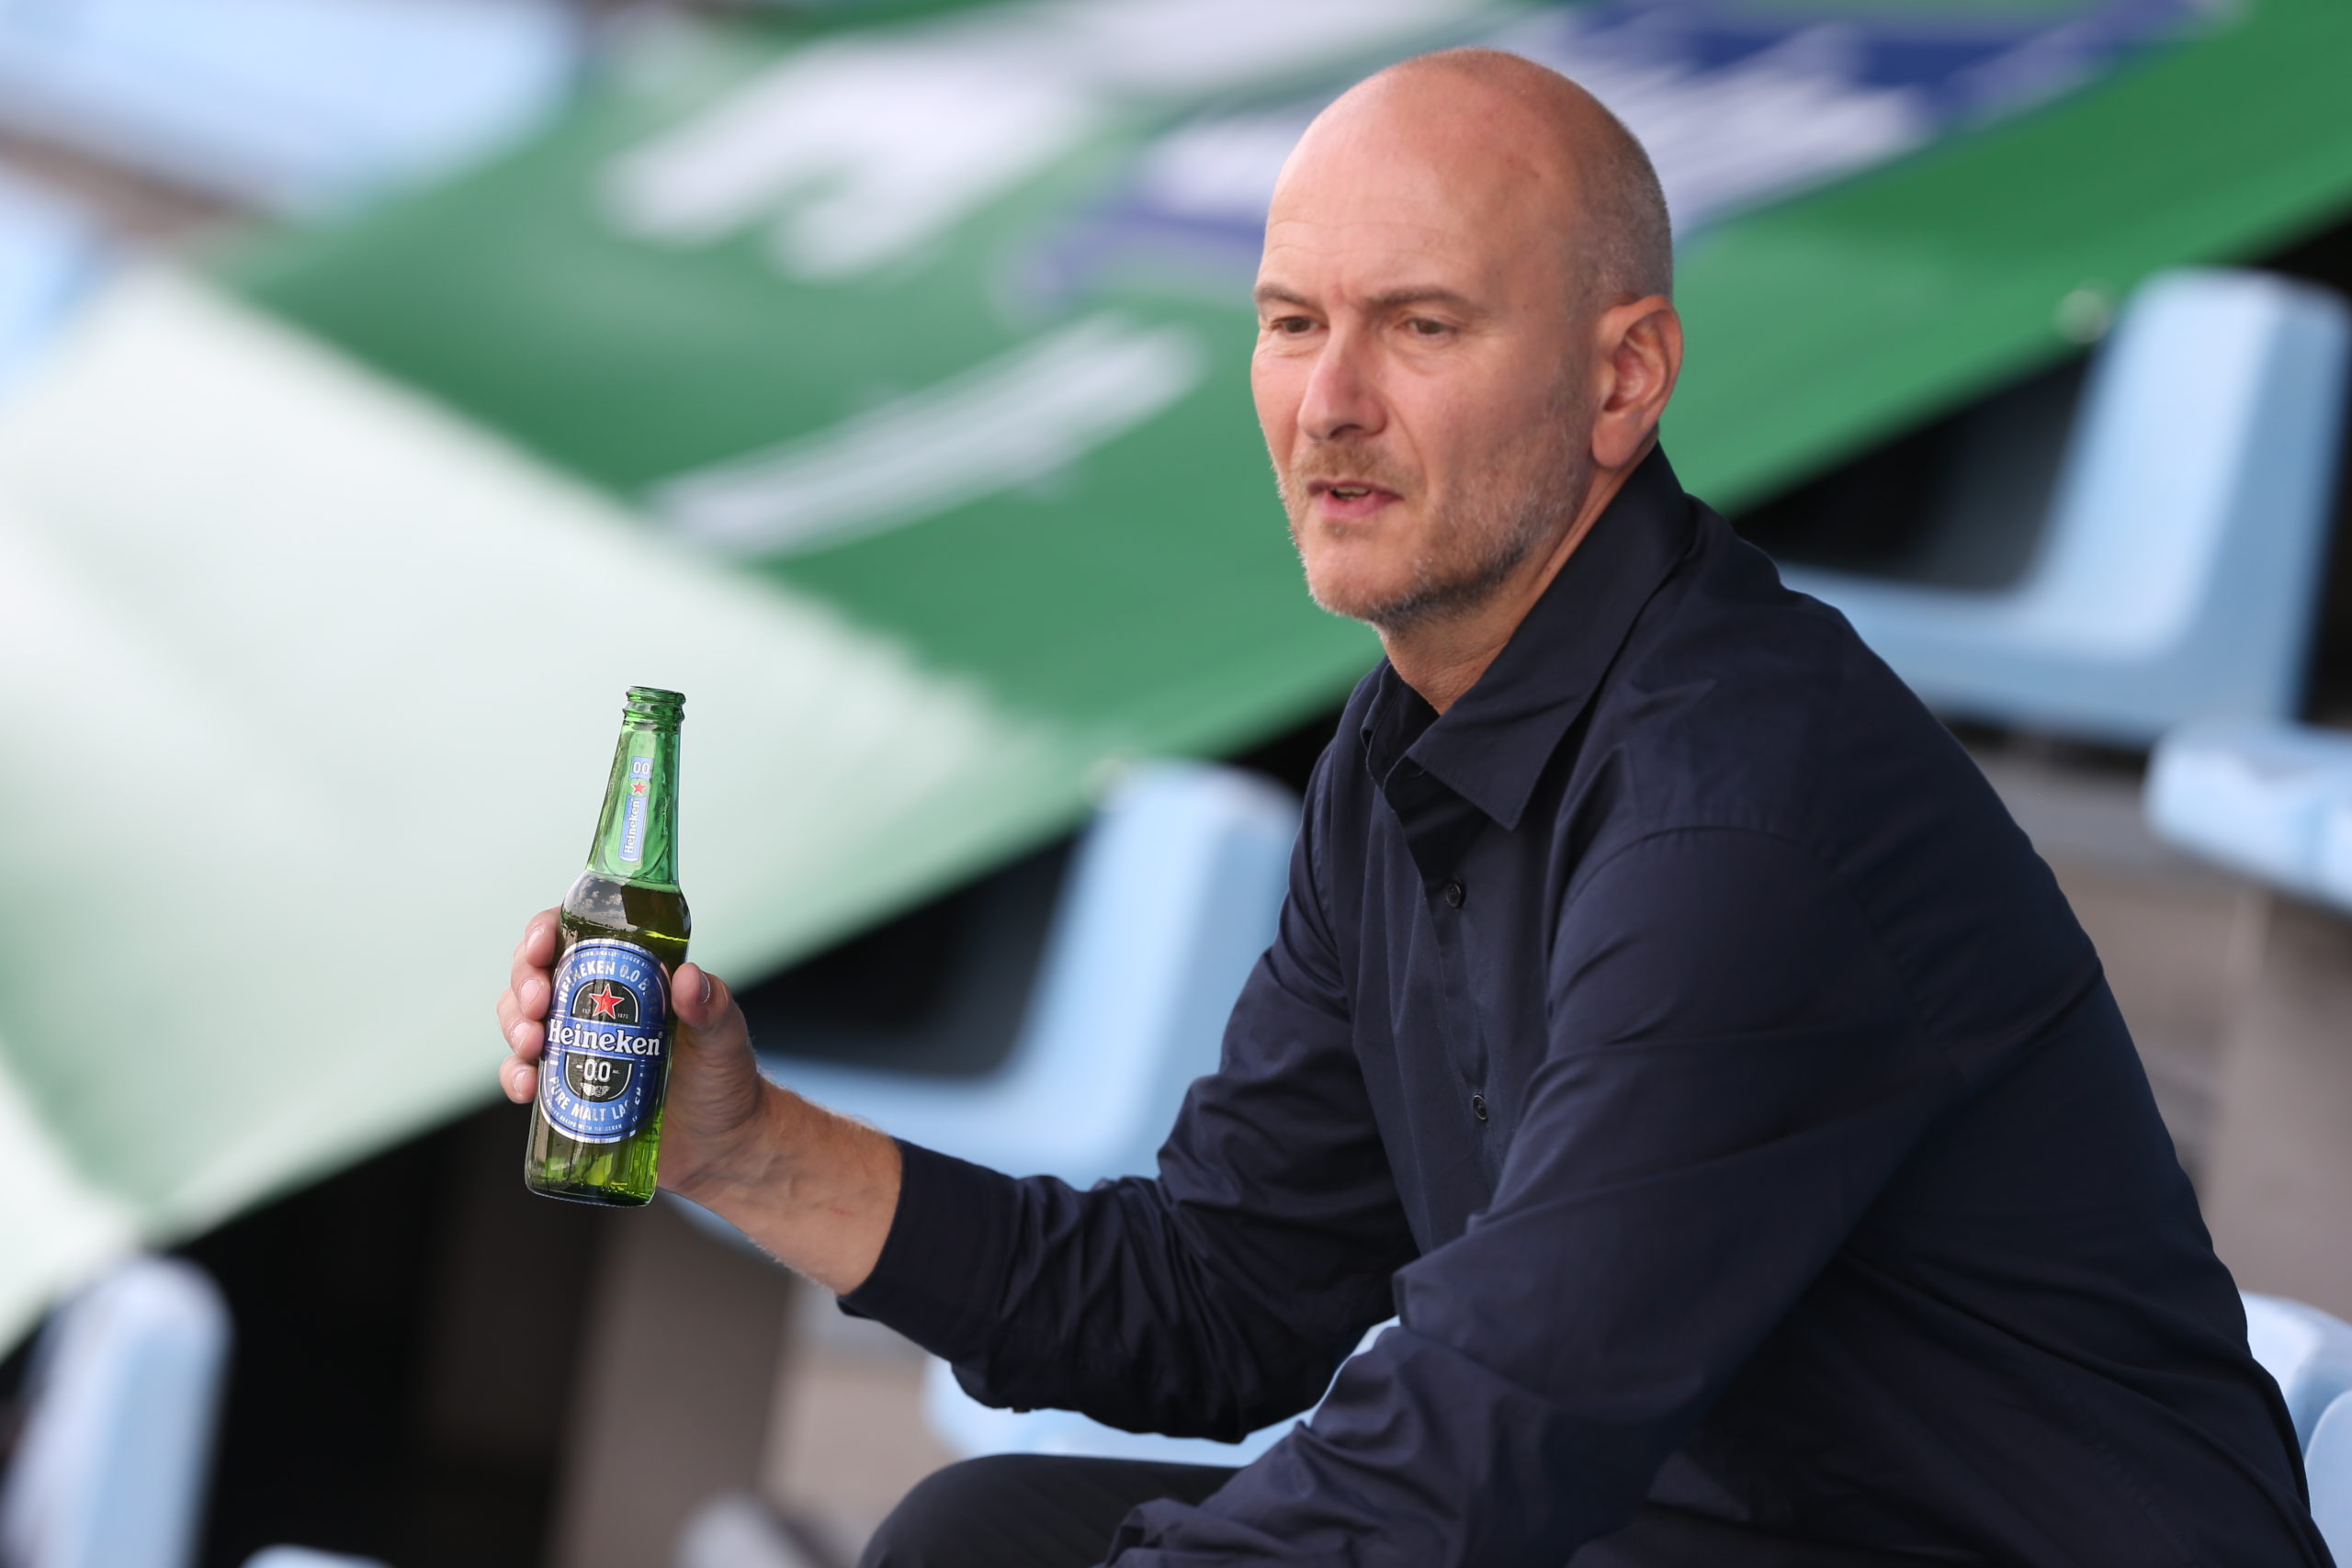 Maurizio Marchini enjoys a Heineken 0.0 after his performance